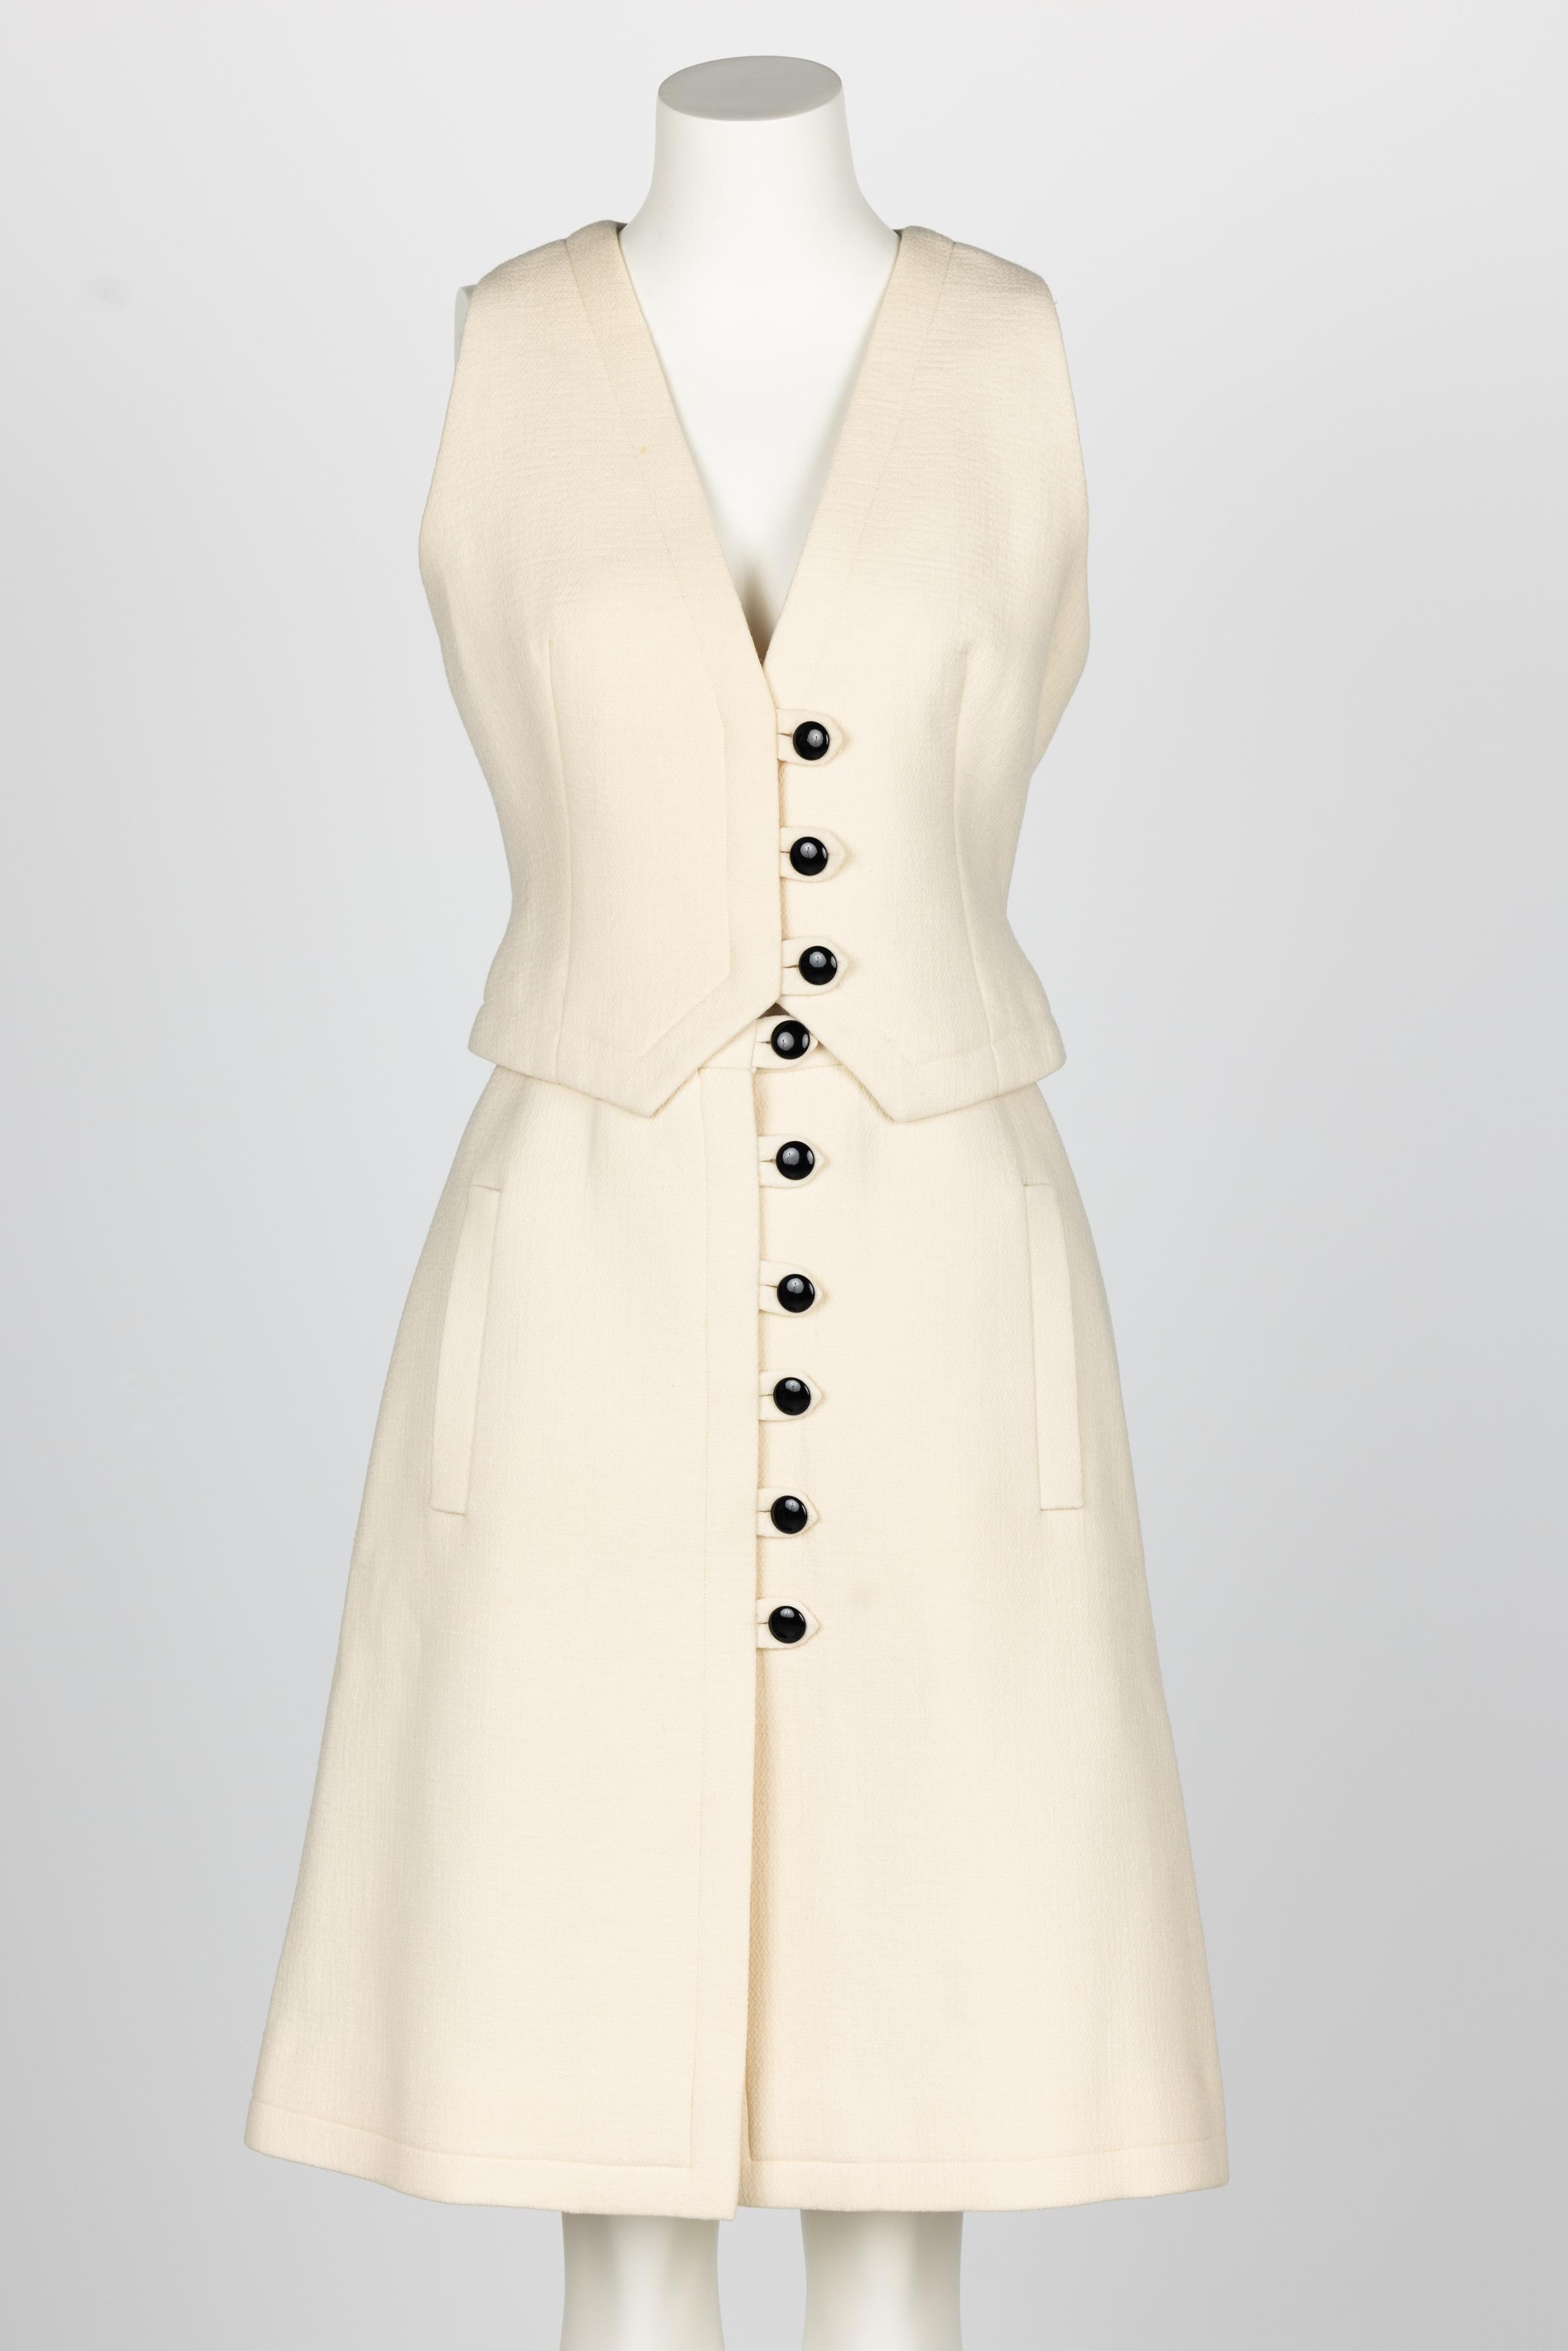 Women's 1960s Pauline Trigere Ivory & Black Tailored Vest Skirt Suit For Sale